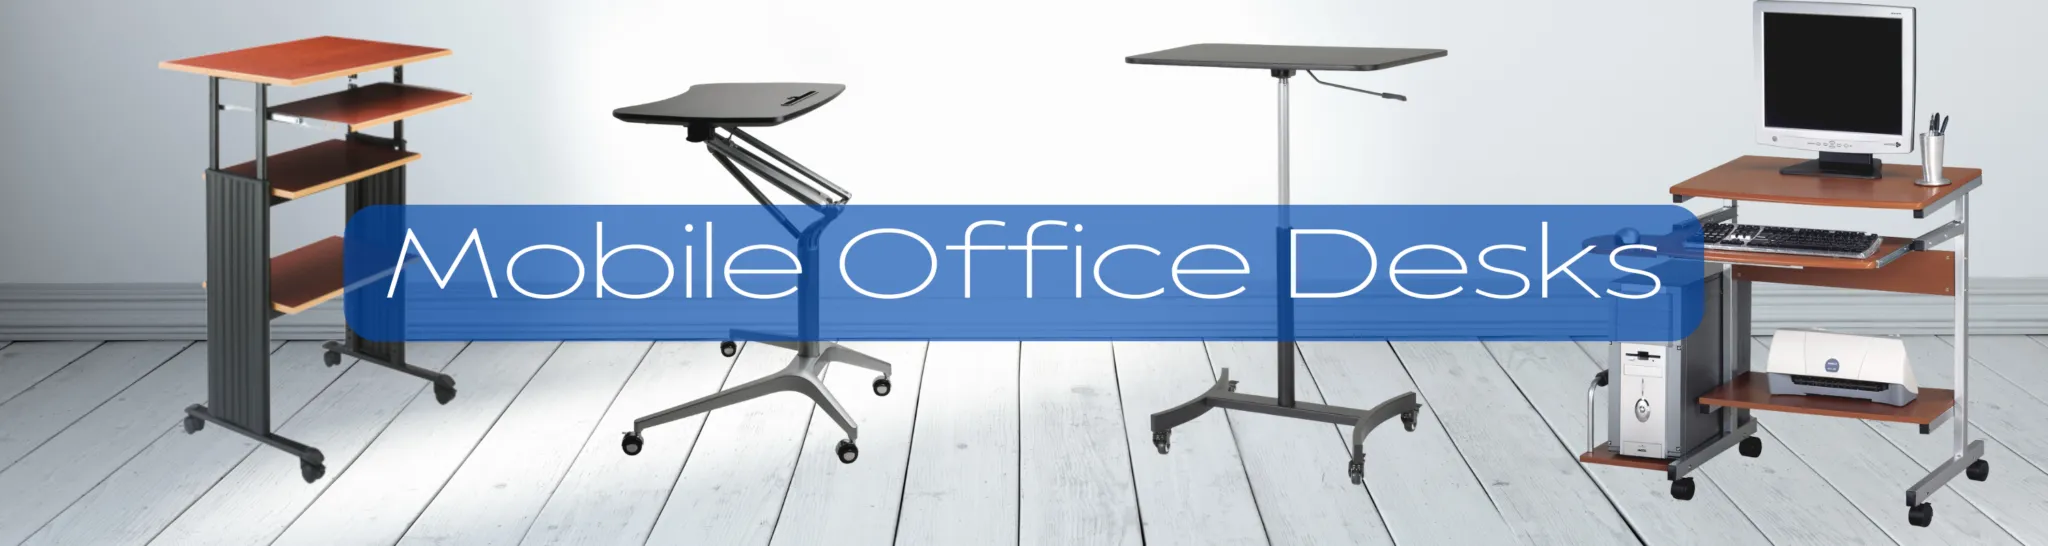 Mobile-Office-Desks-Banner-2048x546